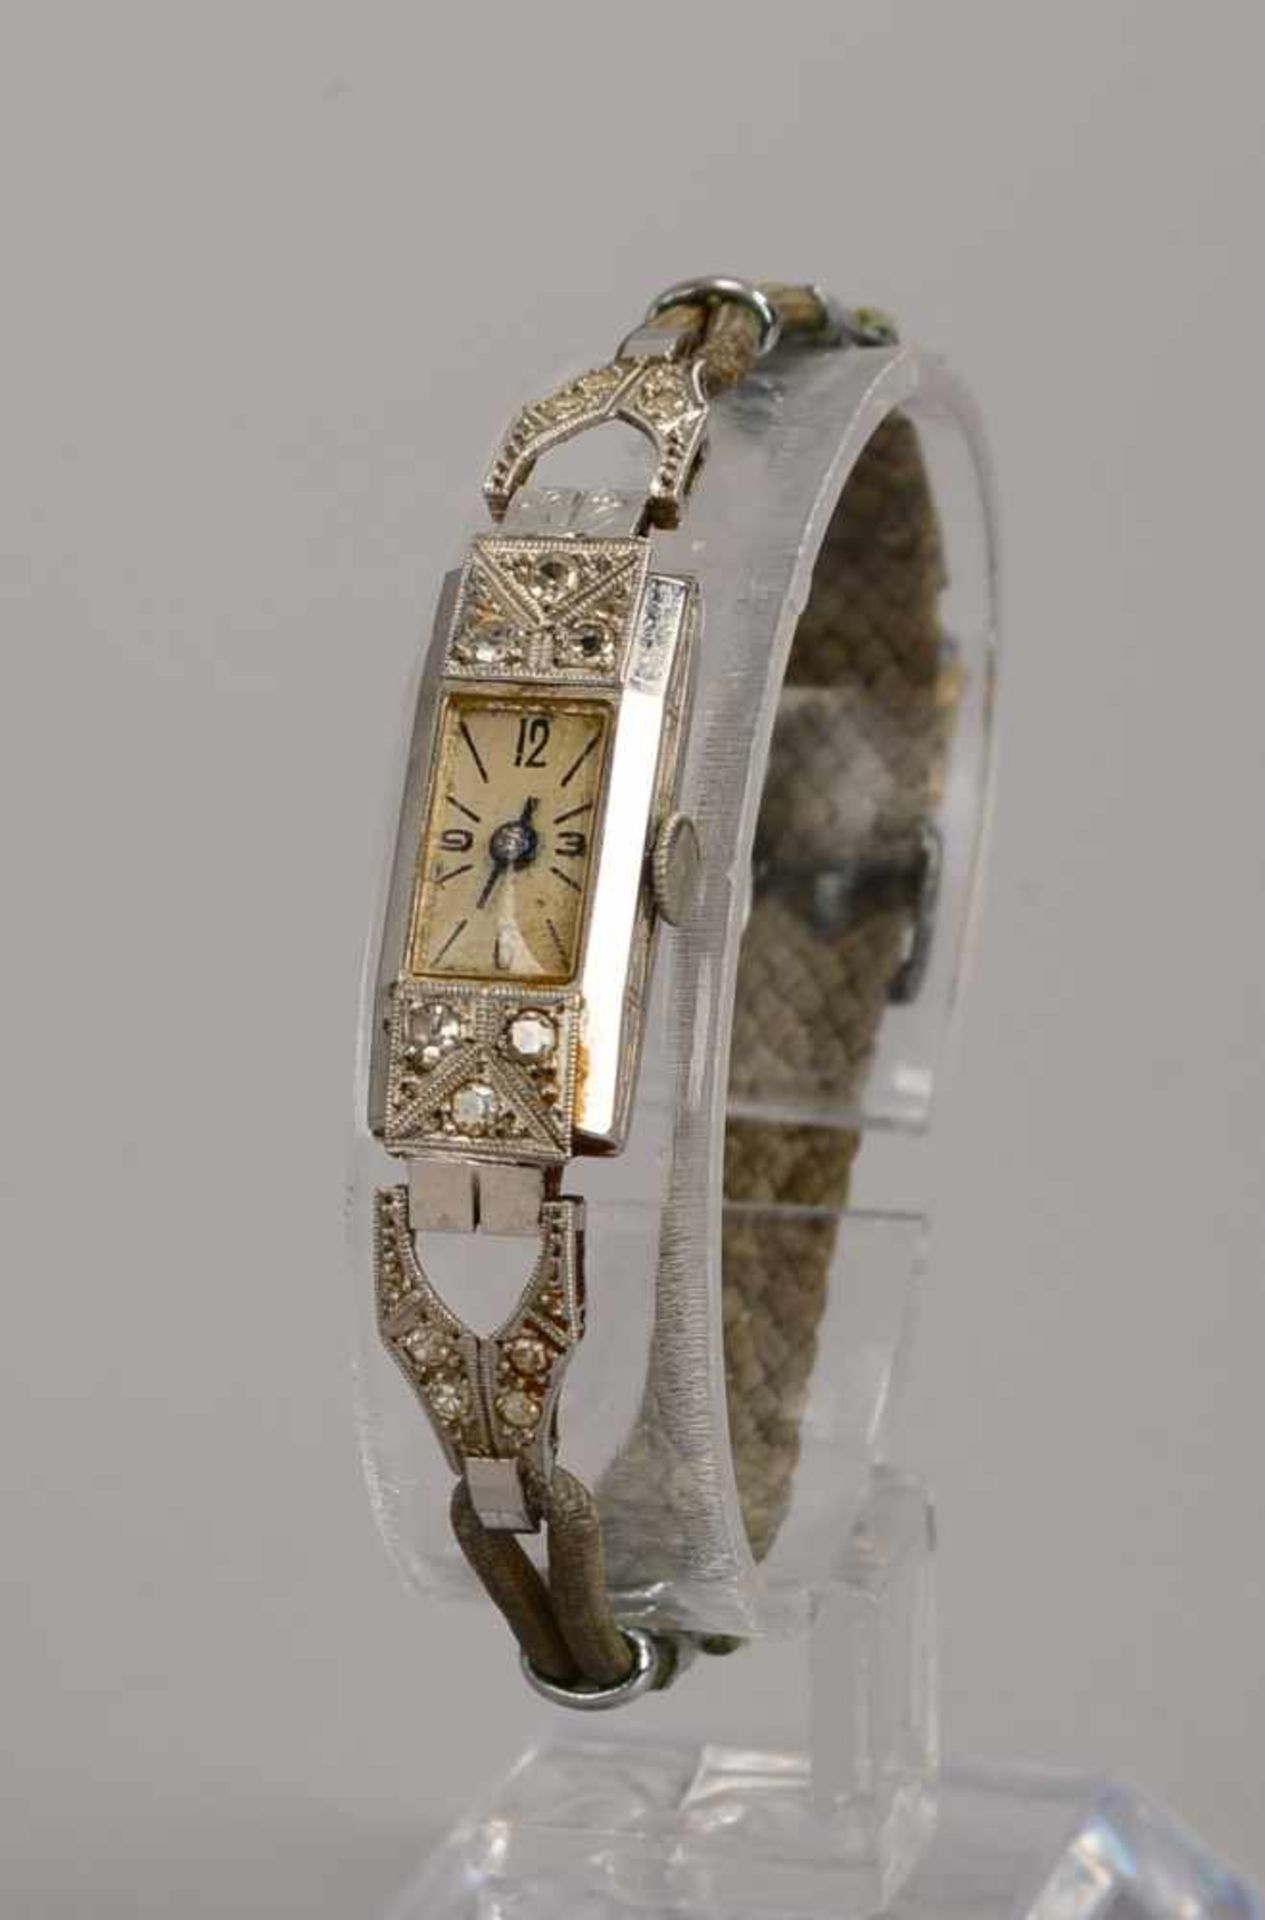 Damenarmbanduhr, Art déco, Platin-Gehäuse mit Diamantsplittern, funktionstüchtig - Bild 2 aus 2